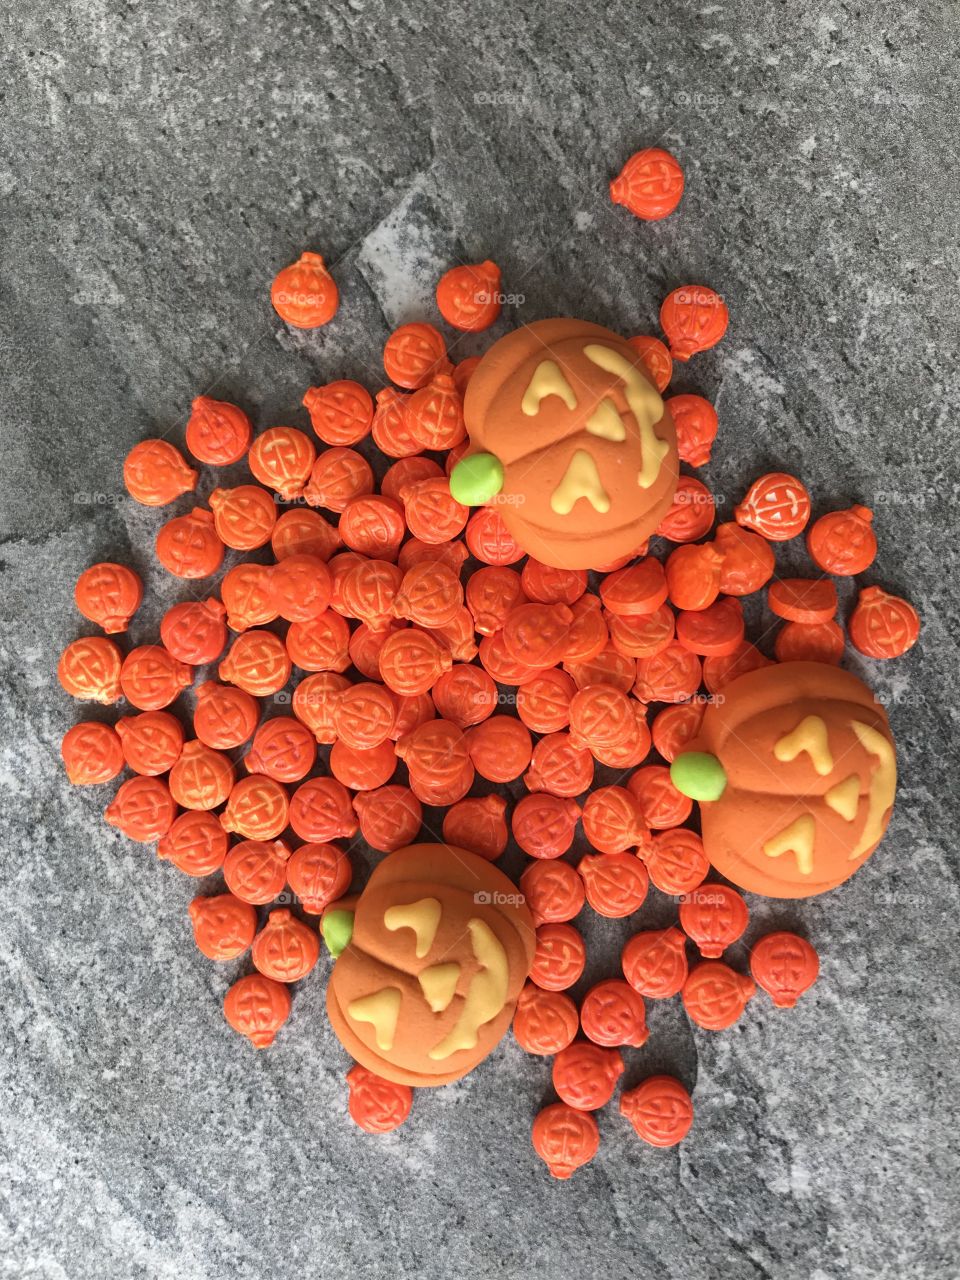 Tiny pumpkin decorating sprinkles for baking!